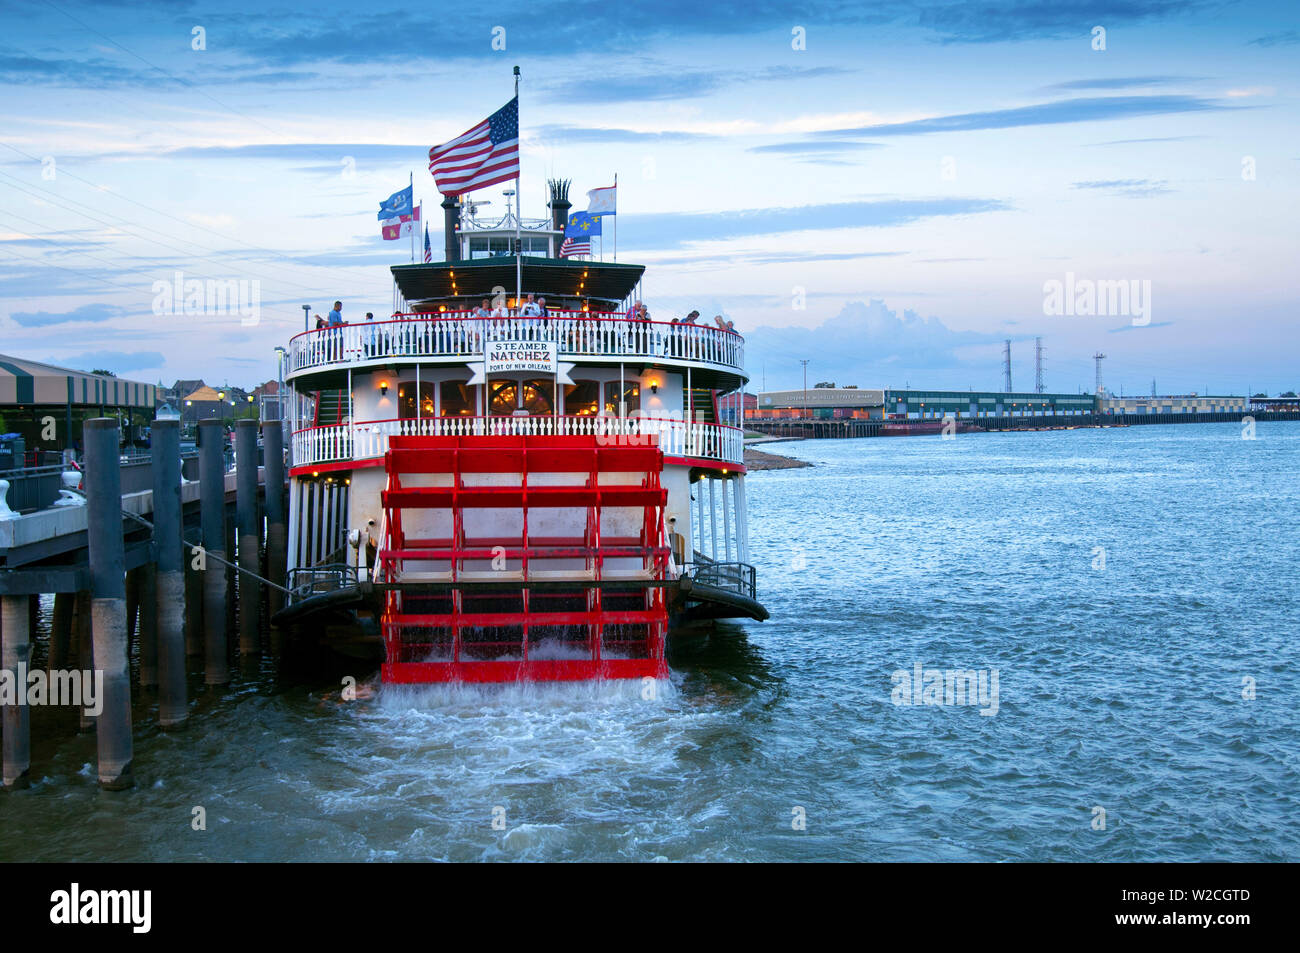 Louisiana, New Orleans, Natchez Steamboat, Mississippi River Stock Photo